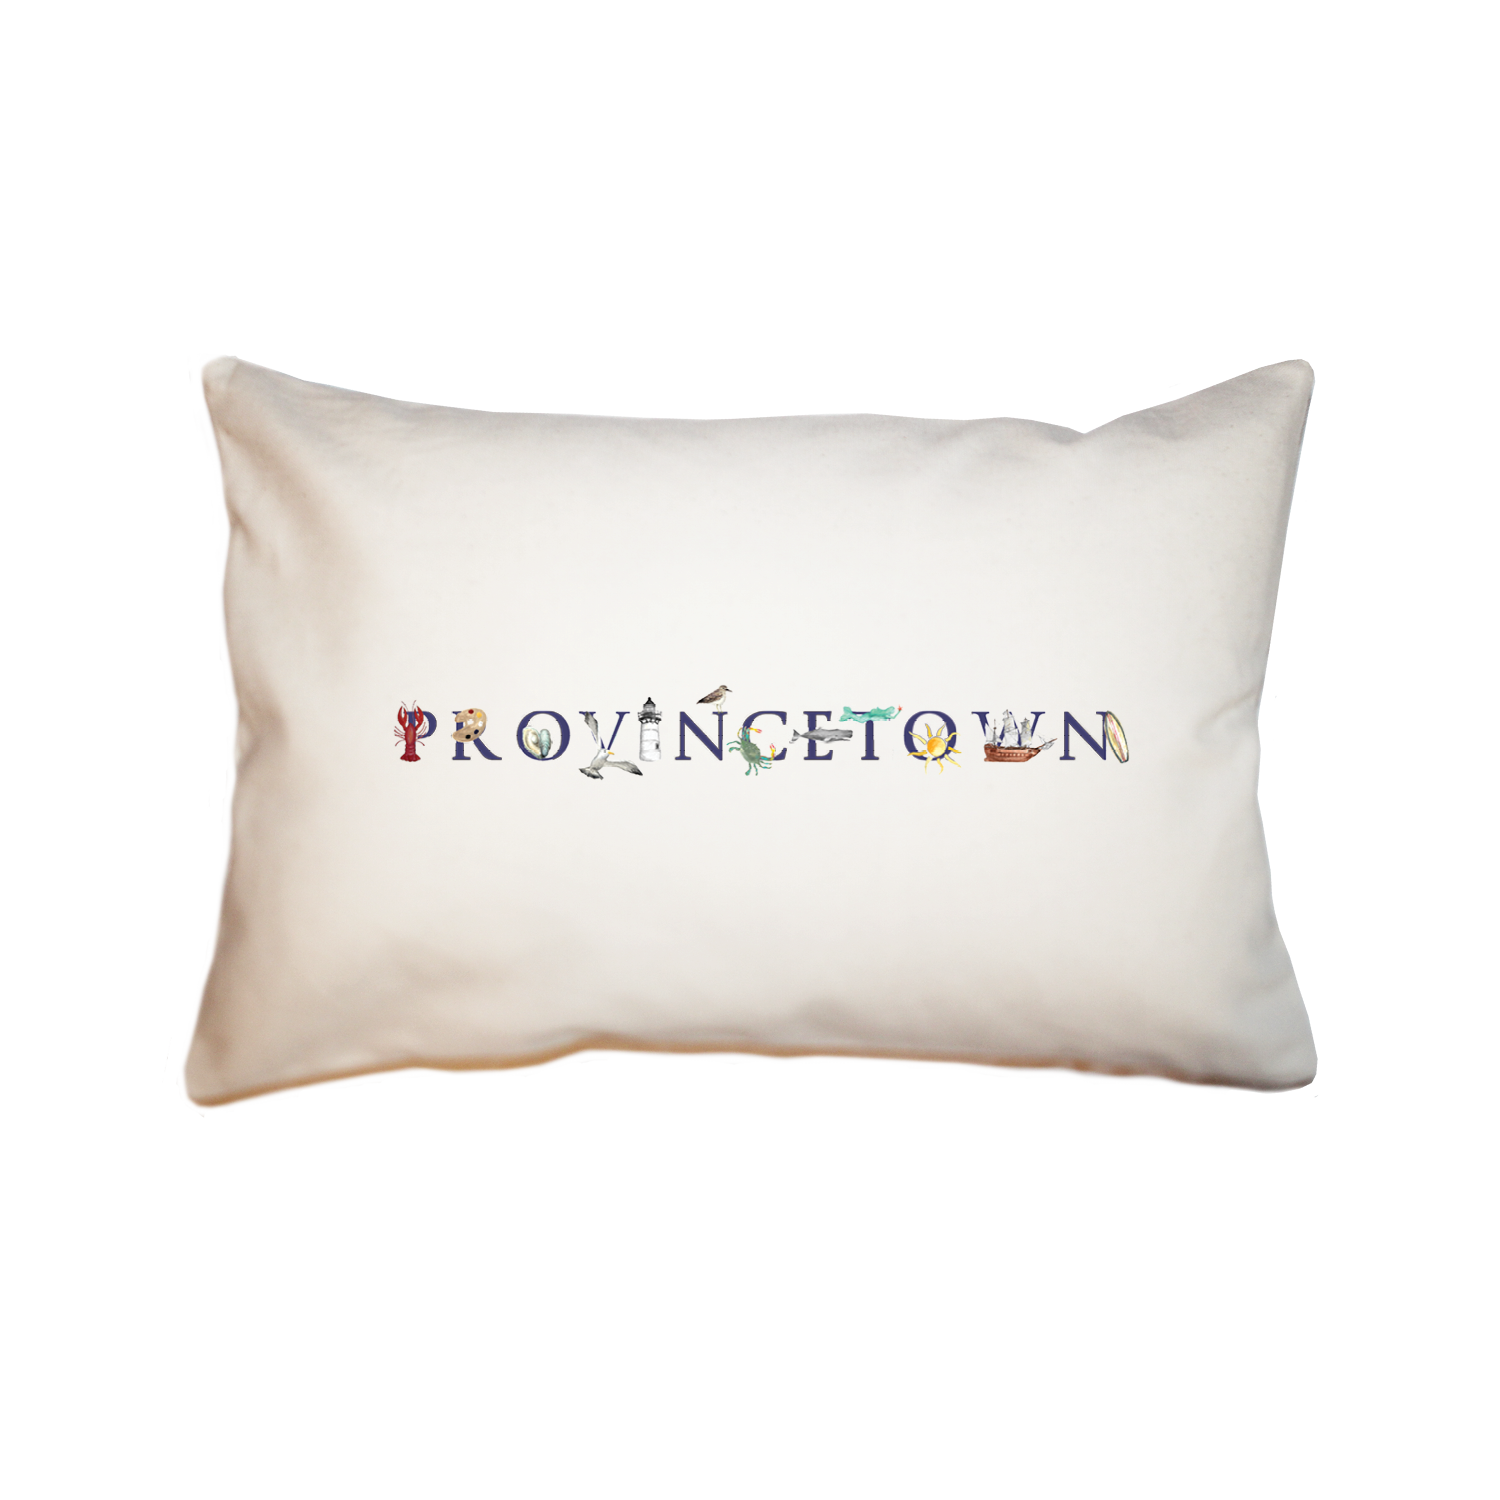 Provincetown large rectangle pillow